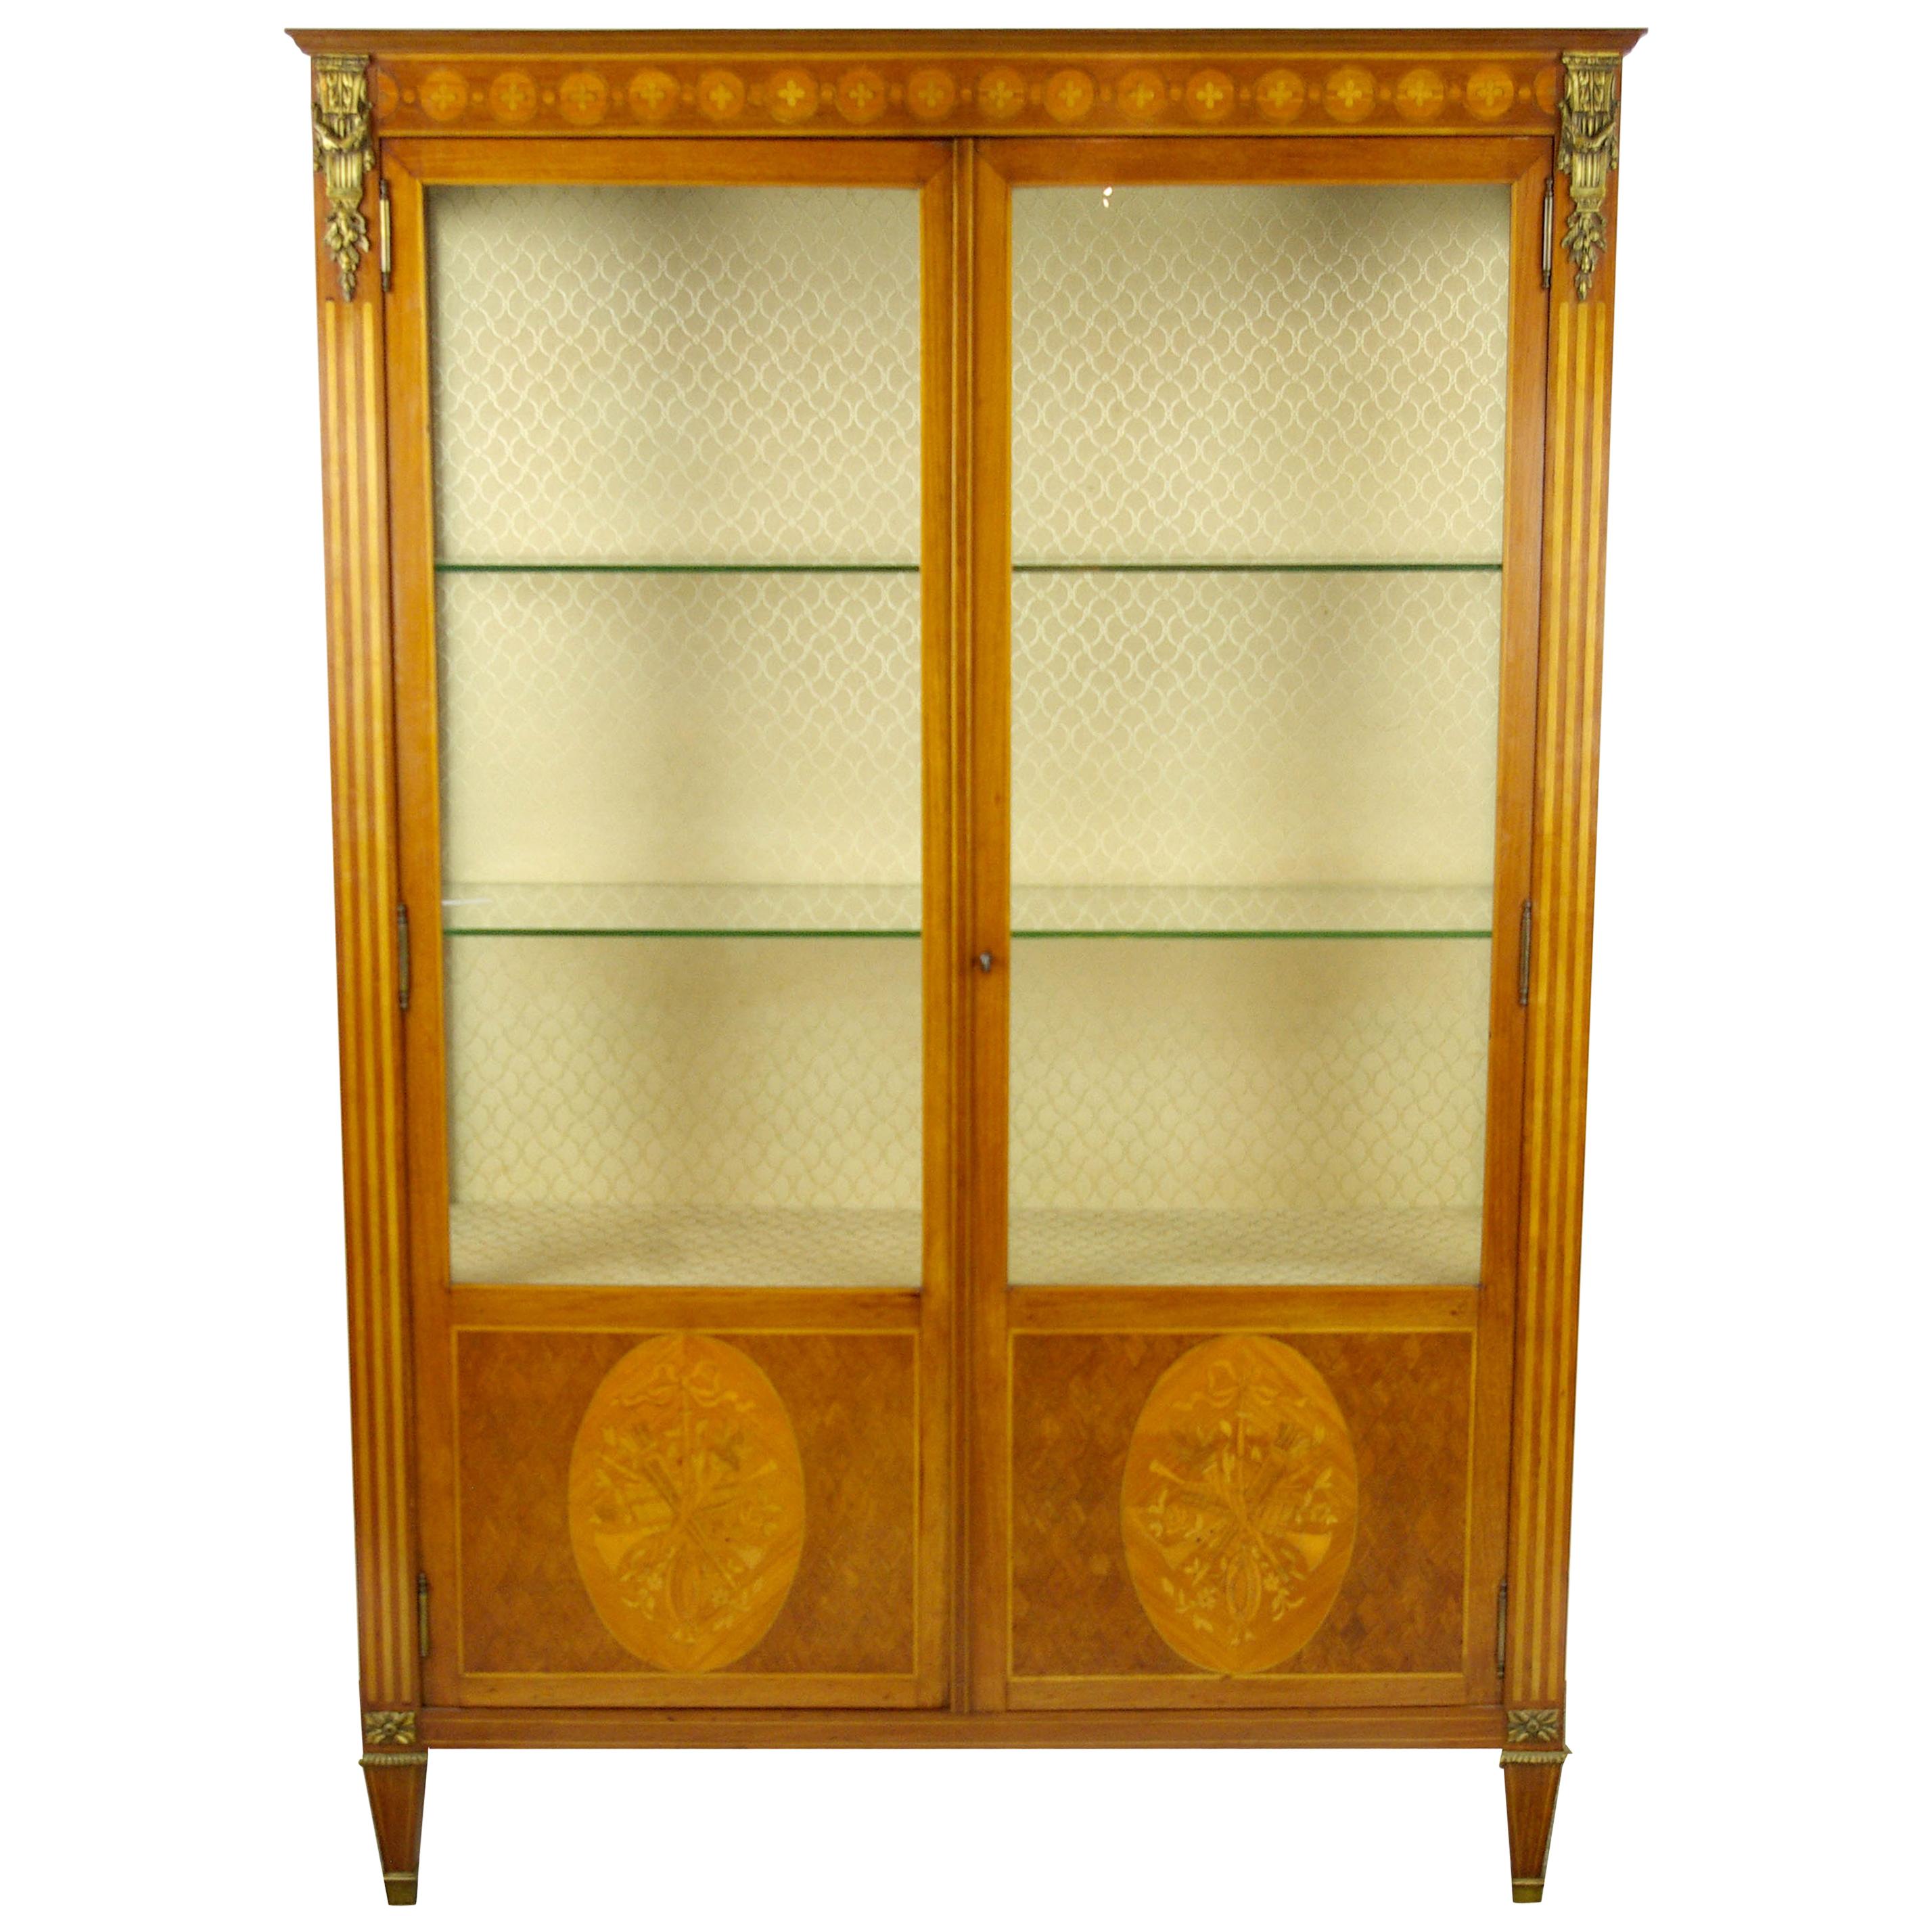 Antique Display Cabinet, Curio Cabinet, Louis XVl Cabinet, Vitrine, 1900